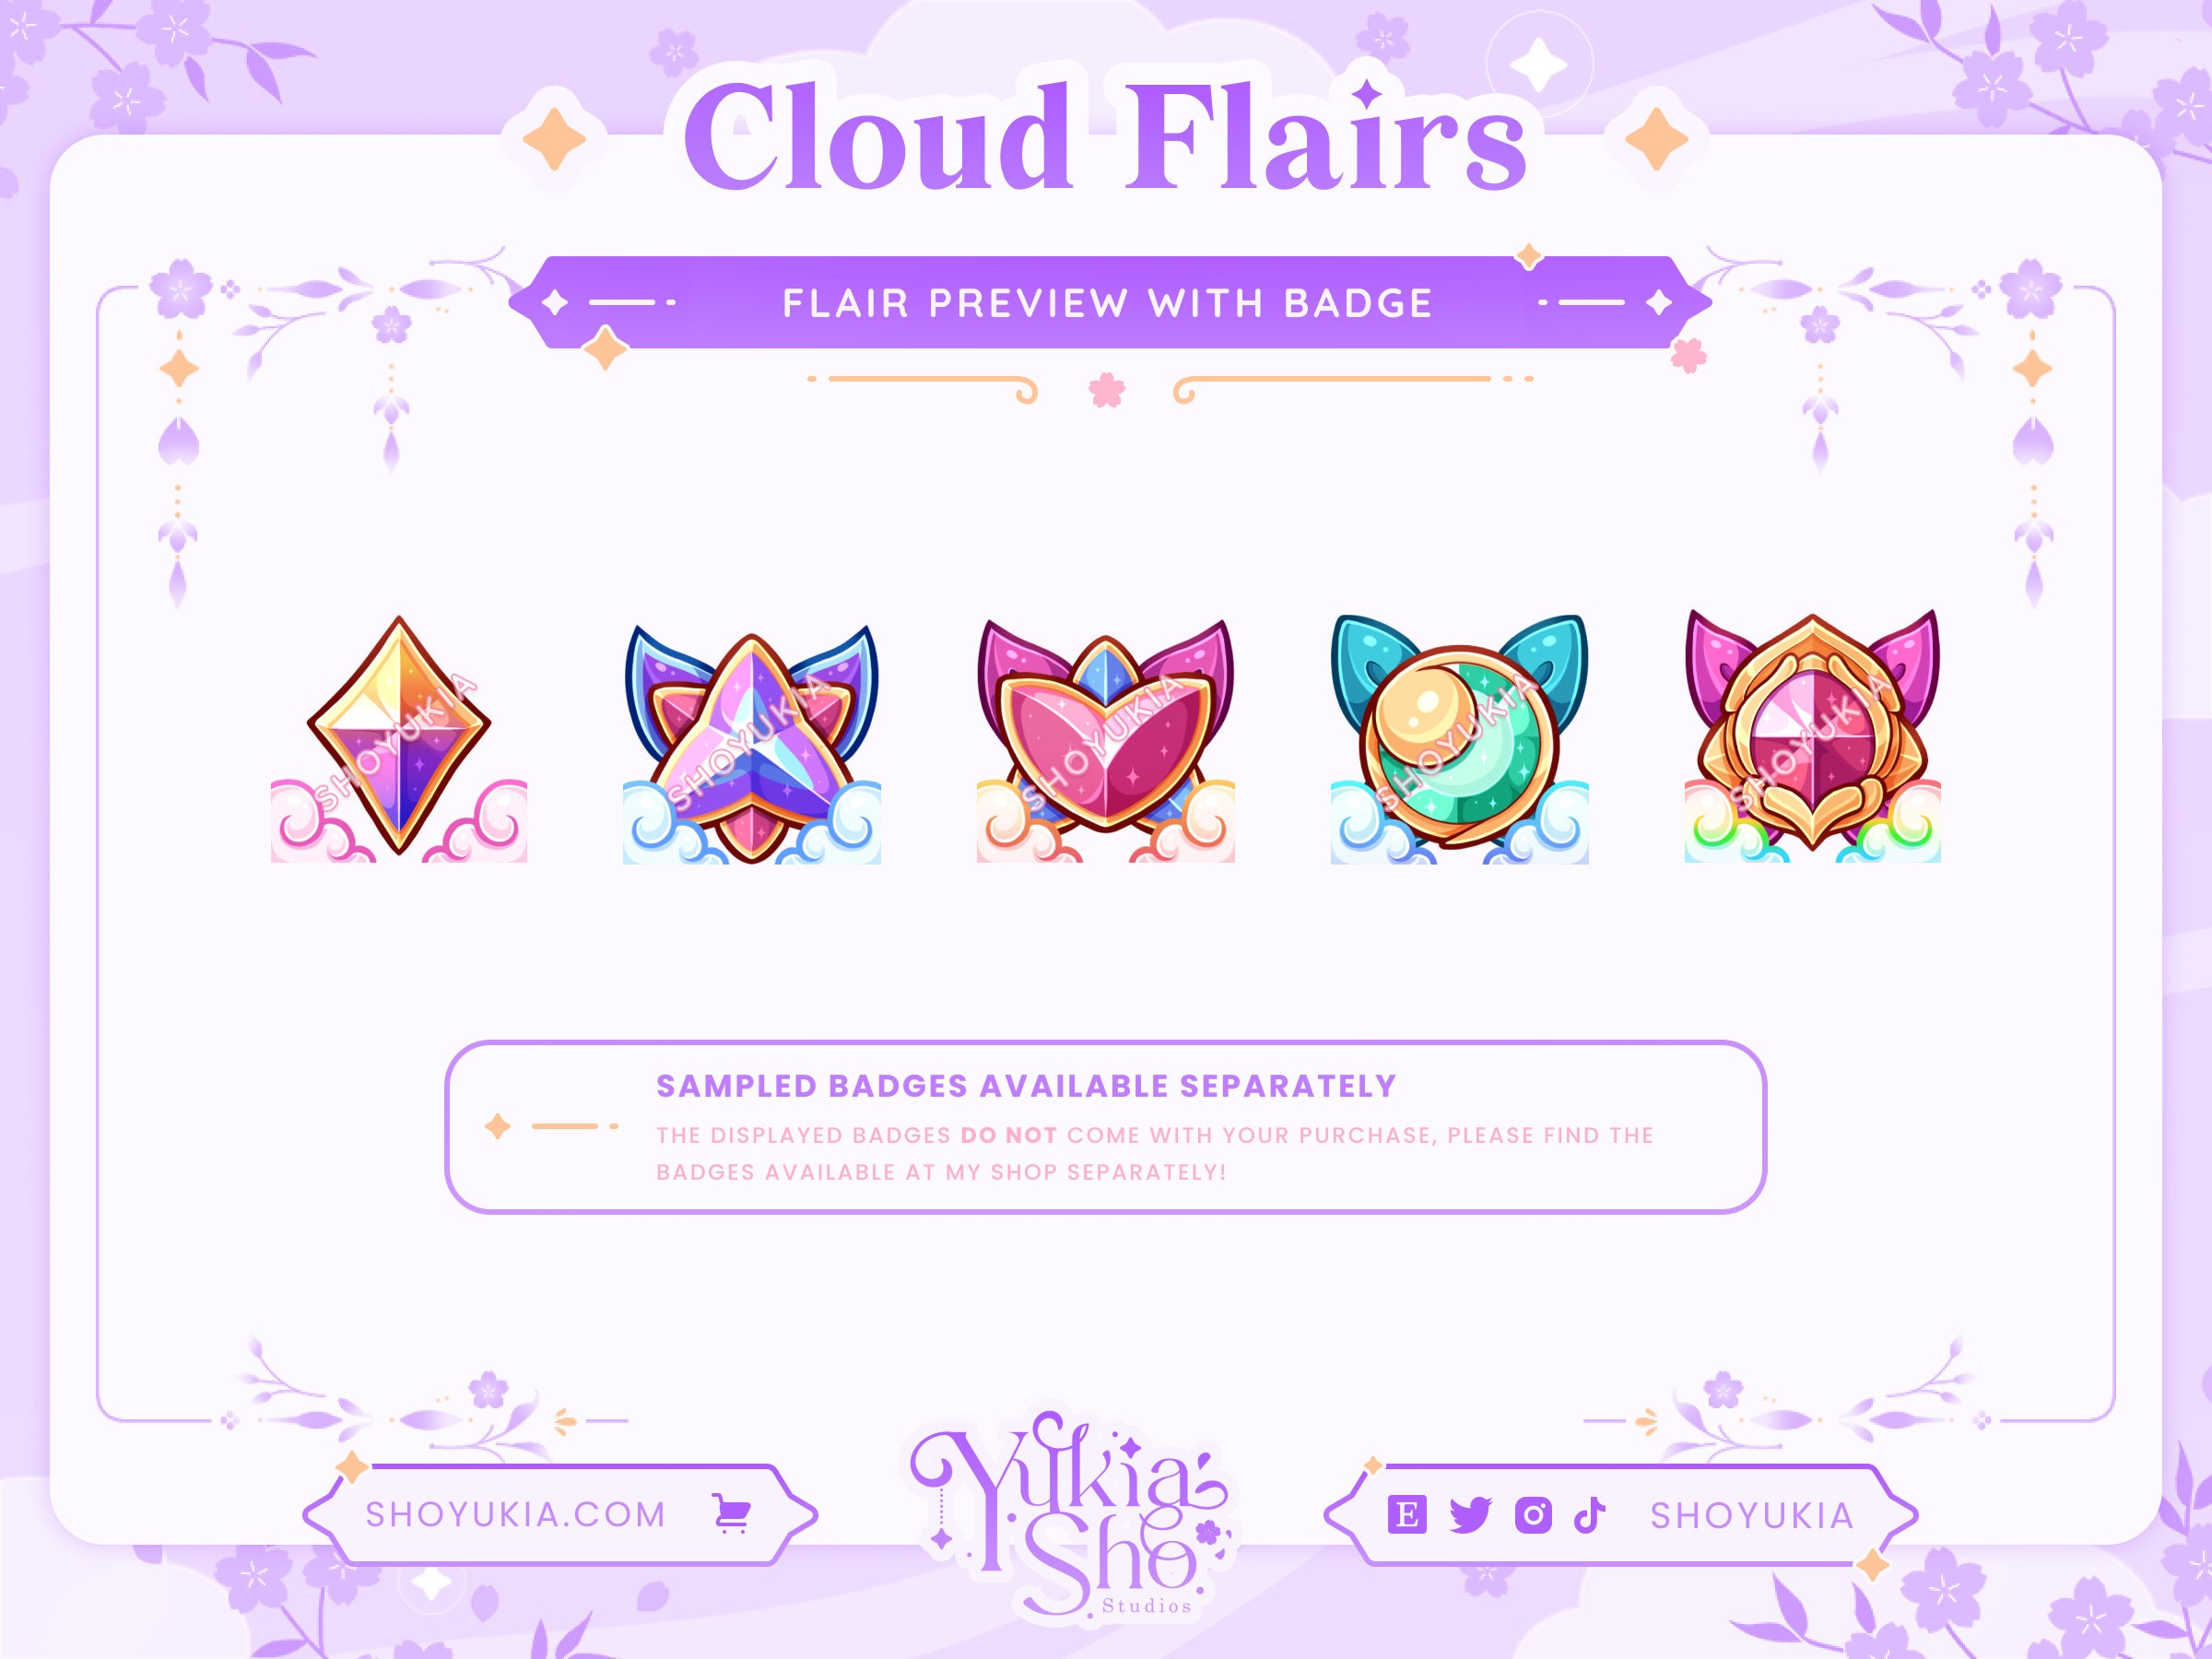 Cloud Twitch Sub Badge Flair | Twitch Sub Badges | Bit Badges | Twitch  Badge Flair